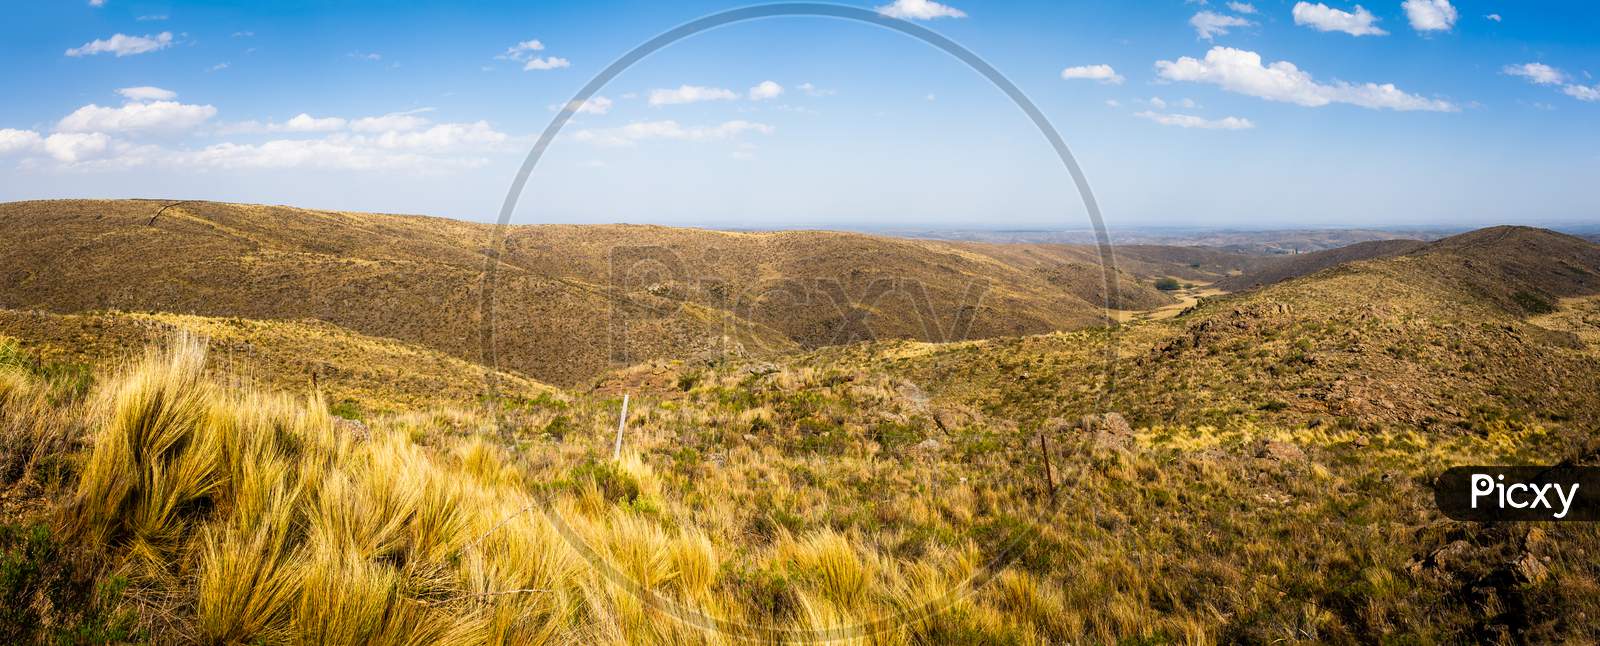 Beautiful Panoramic View Of The San Luis Mountains In Argentina. Highway Runs Between Arid Mountainous Soil.